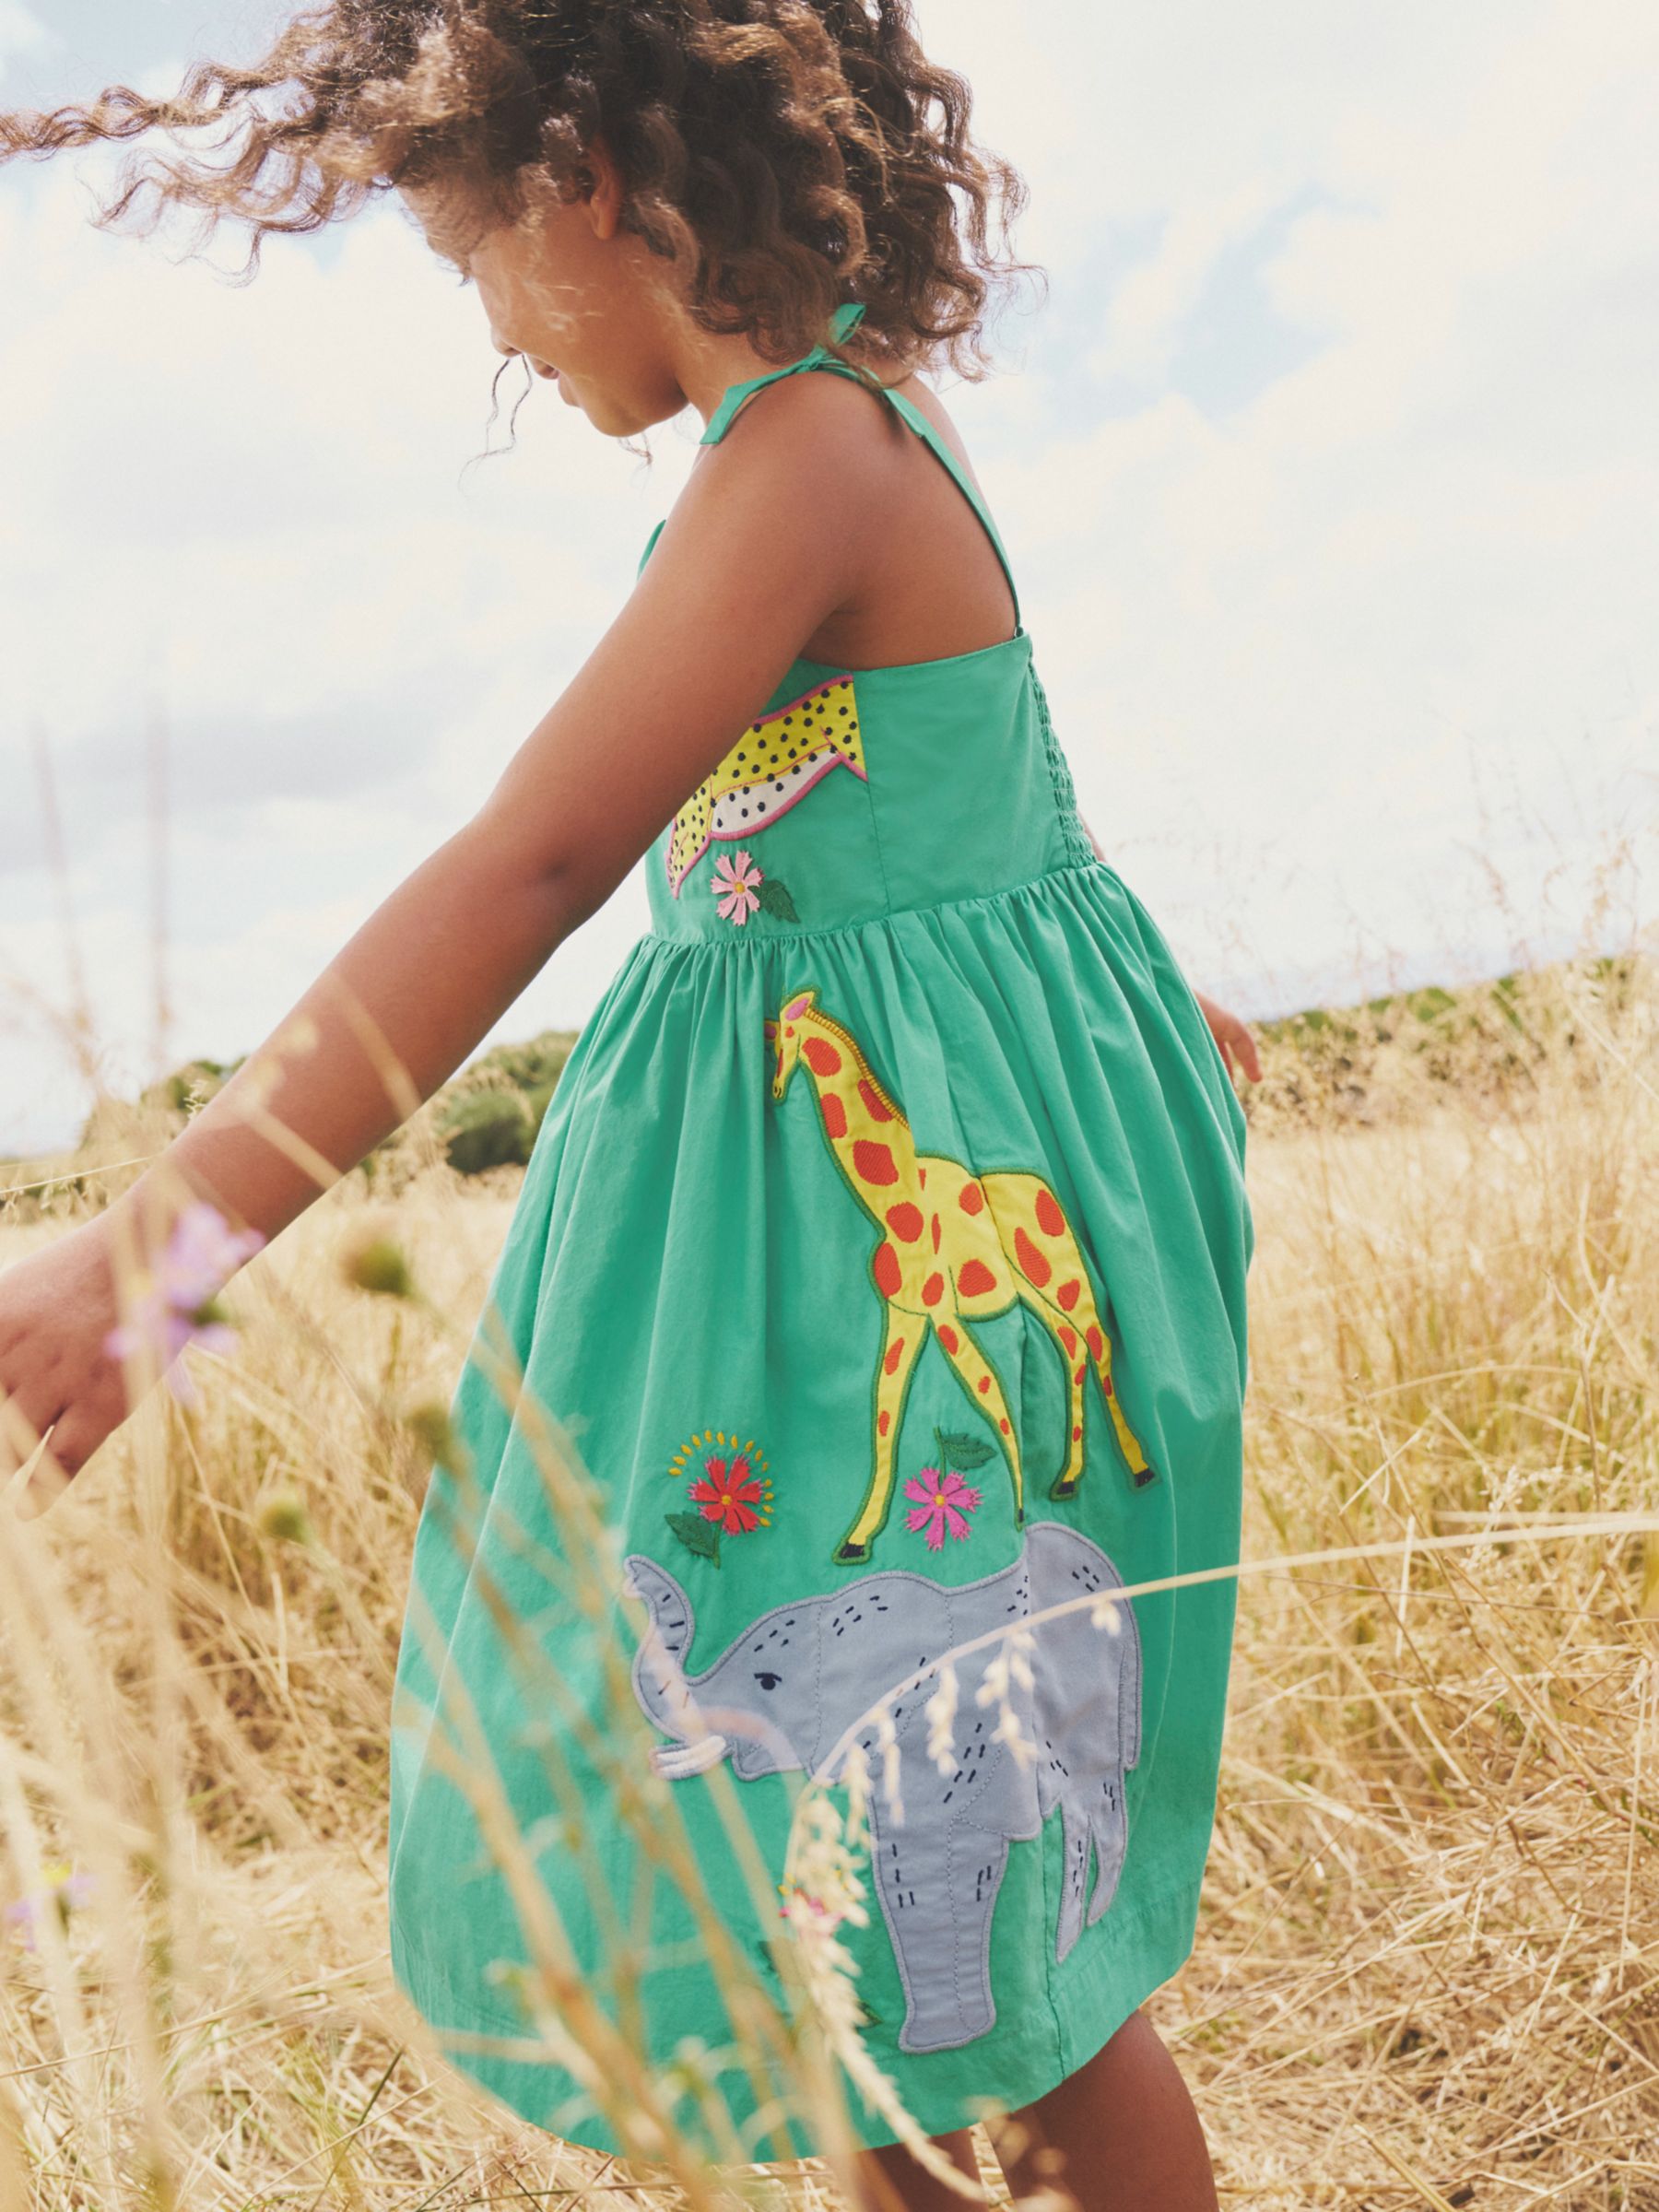 Buy Boden Kids' Animal Appliqué Cotton Dress, Green Online at johnlewis.com